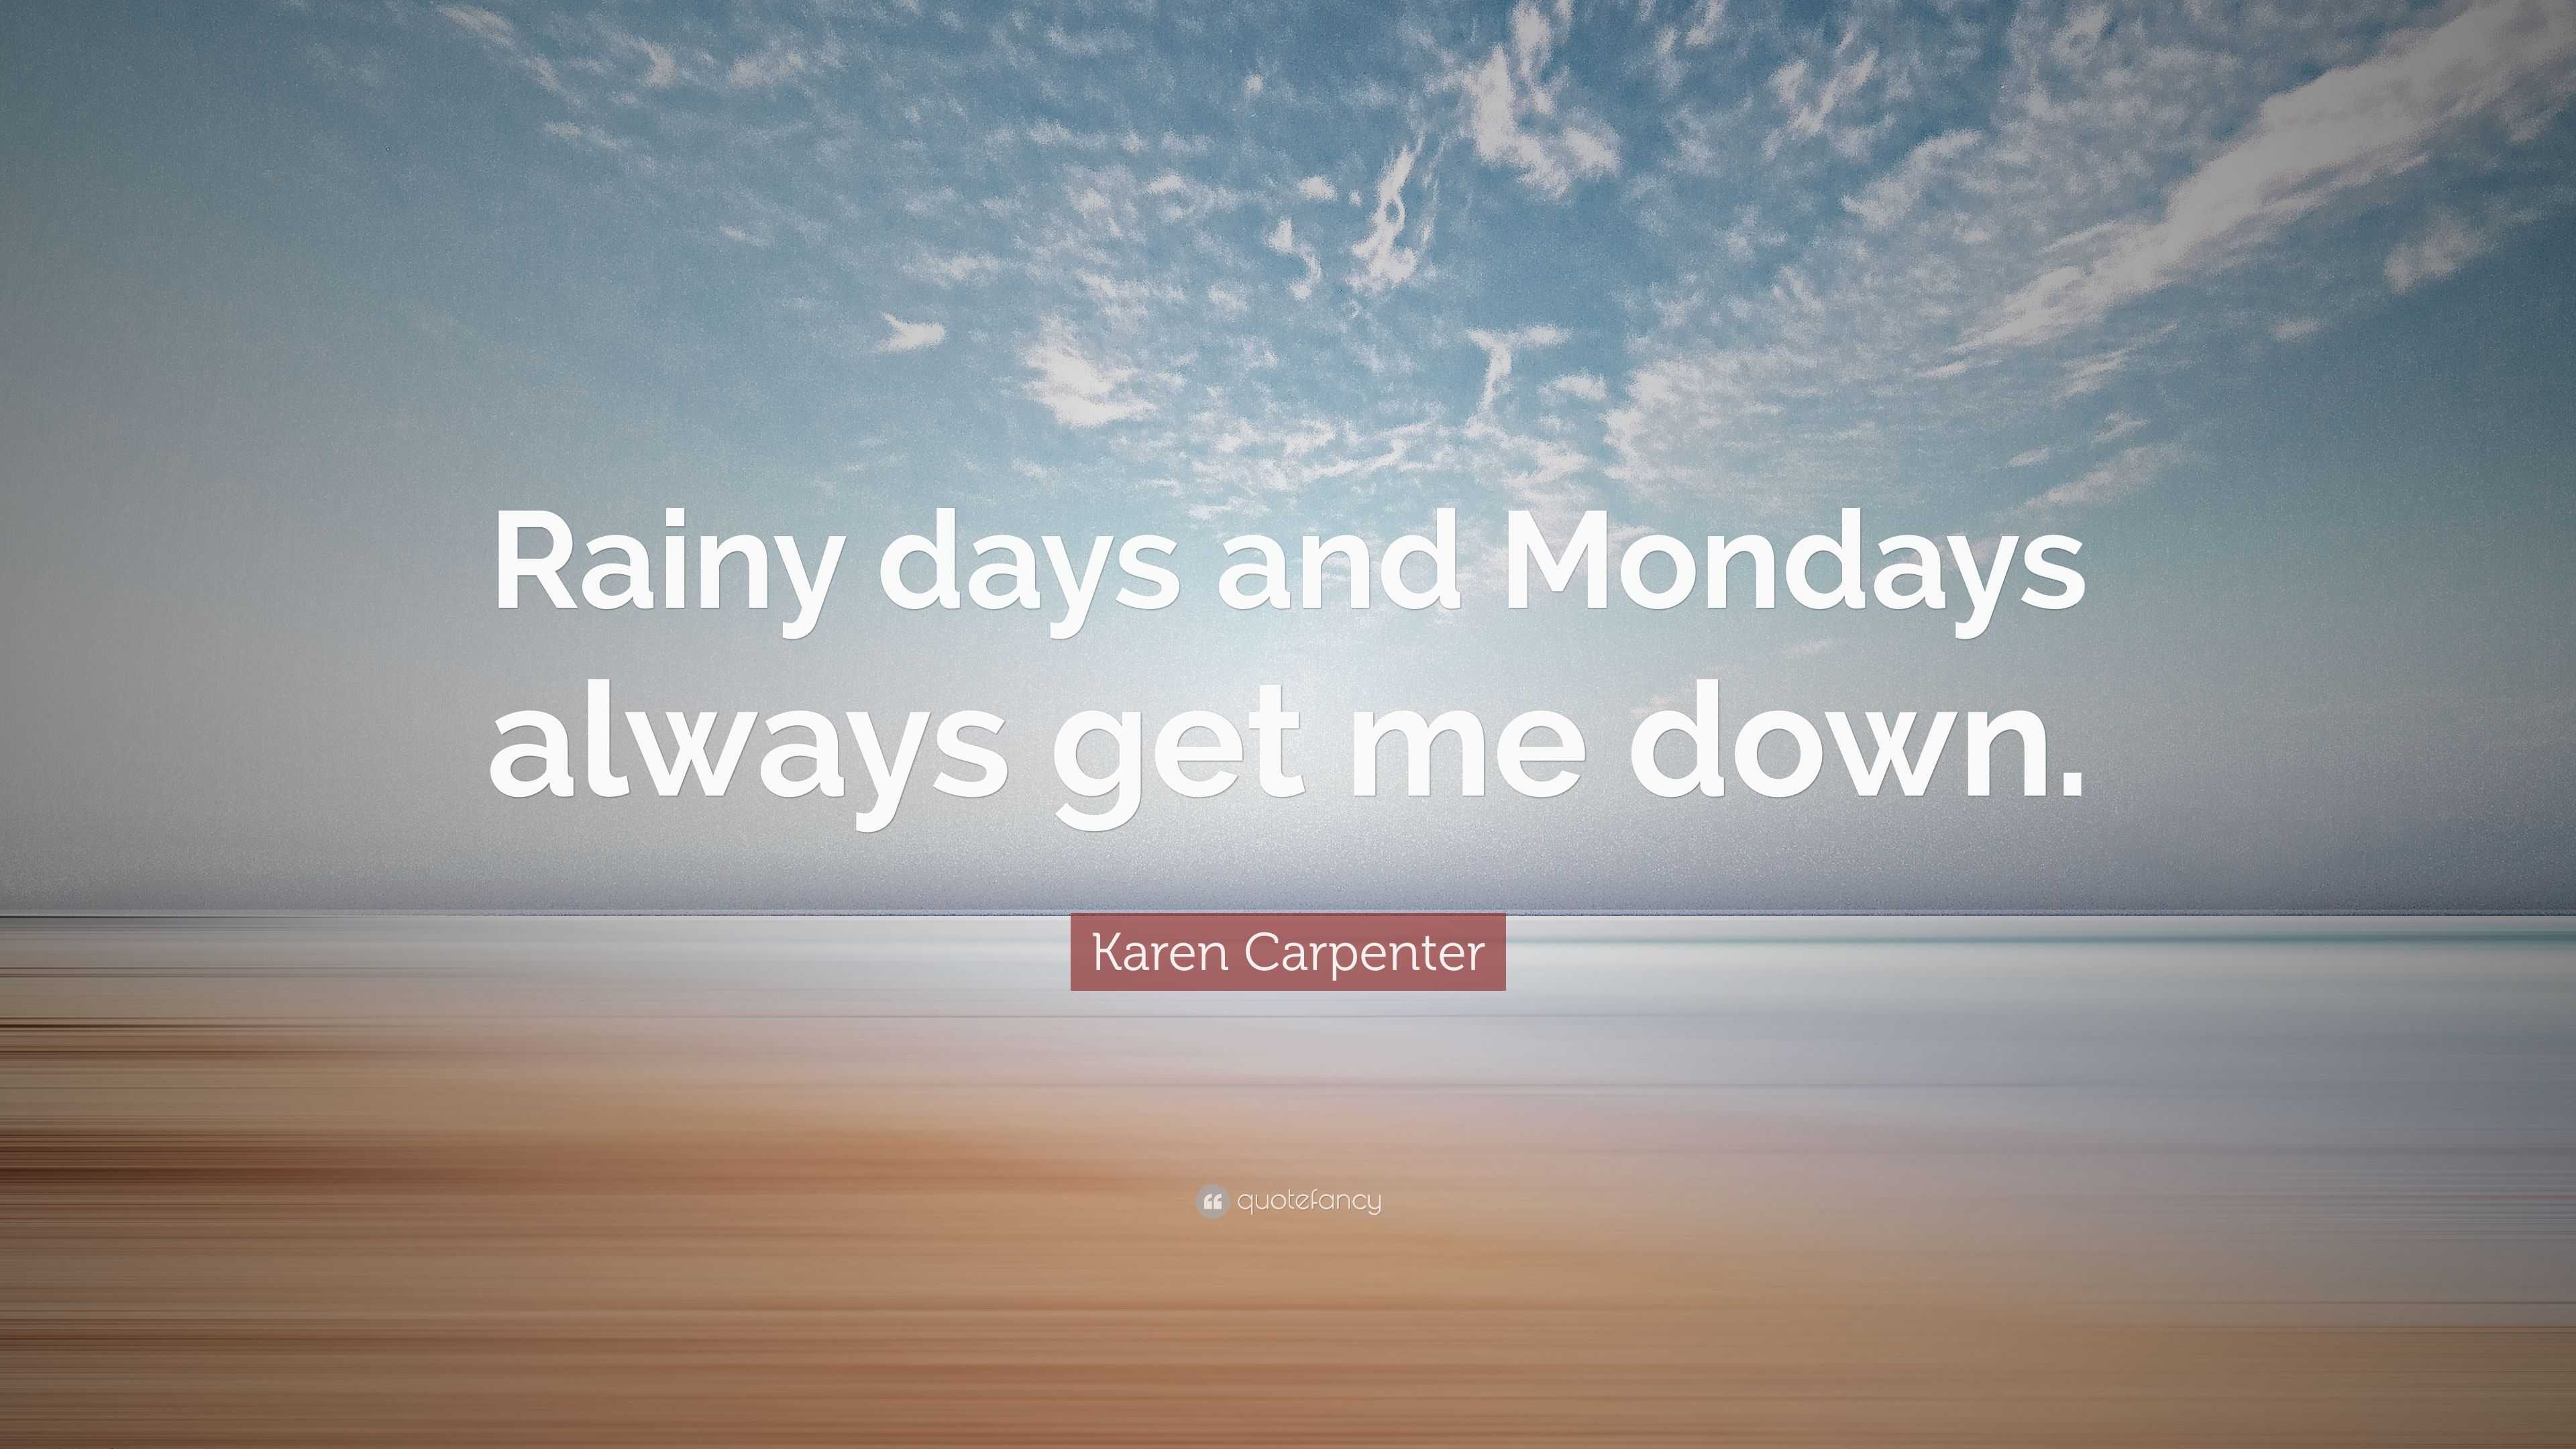 Karen Carpenter Quote: “Rainy days and Mondays always get me down.”